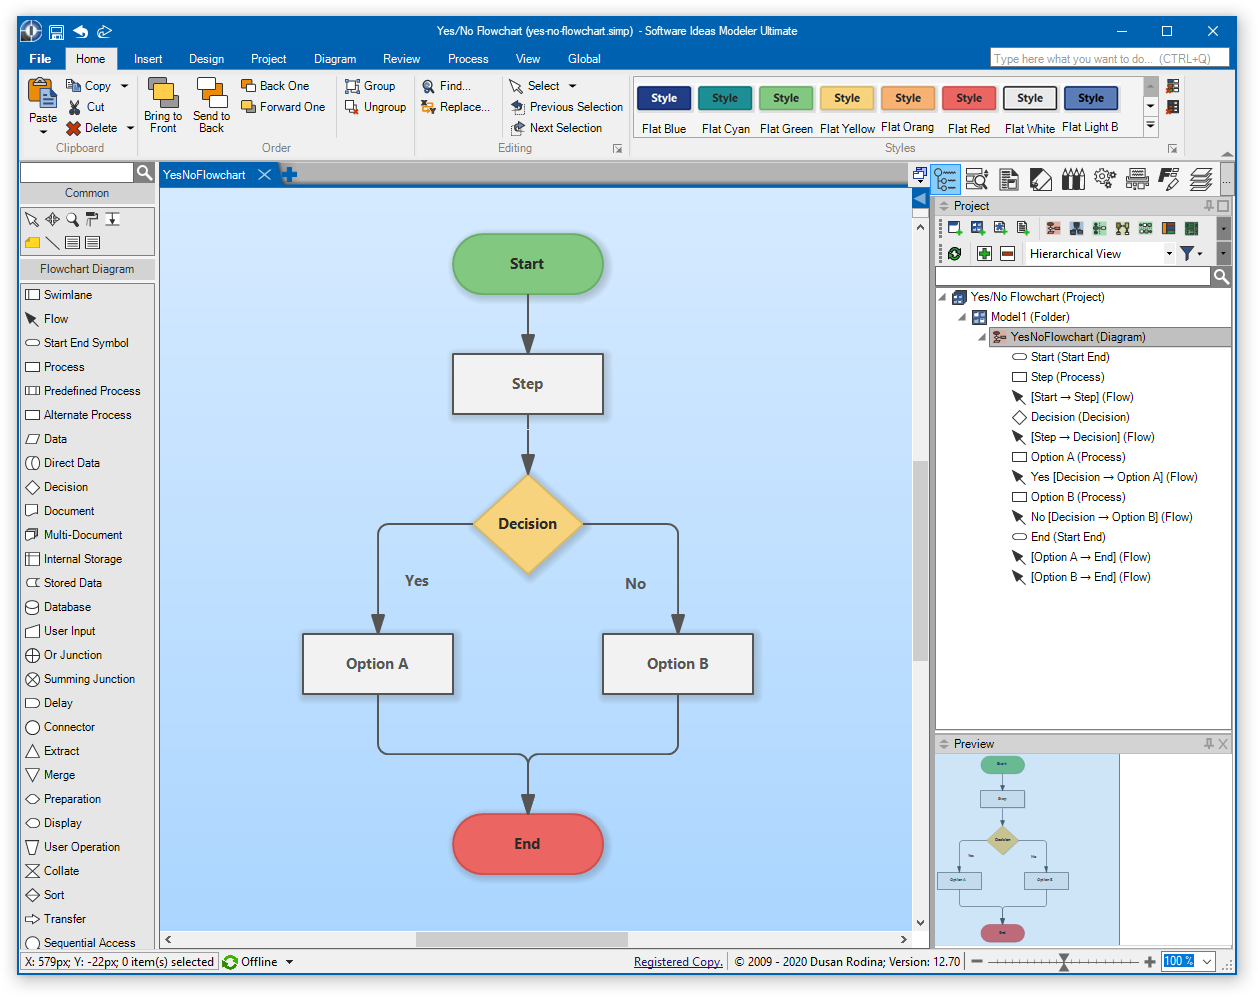 Flowchart Maker Easy To Use Flowchart Software Software Ideas Modeler